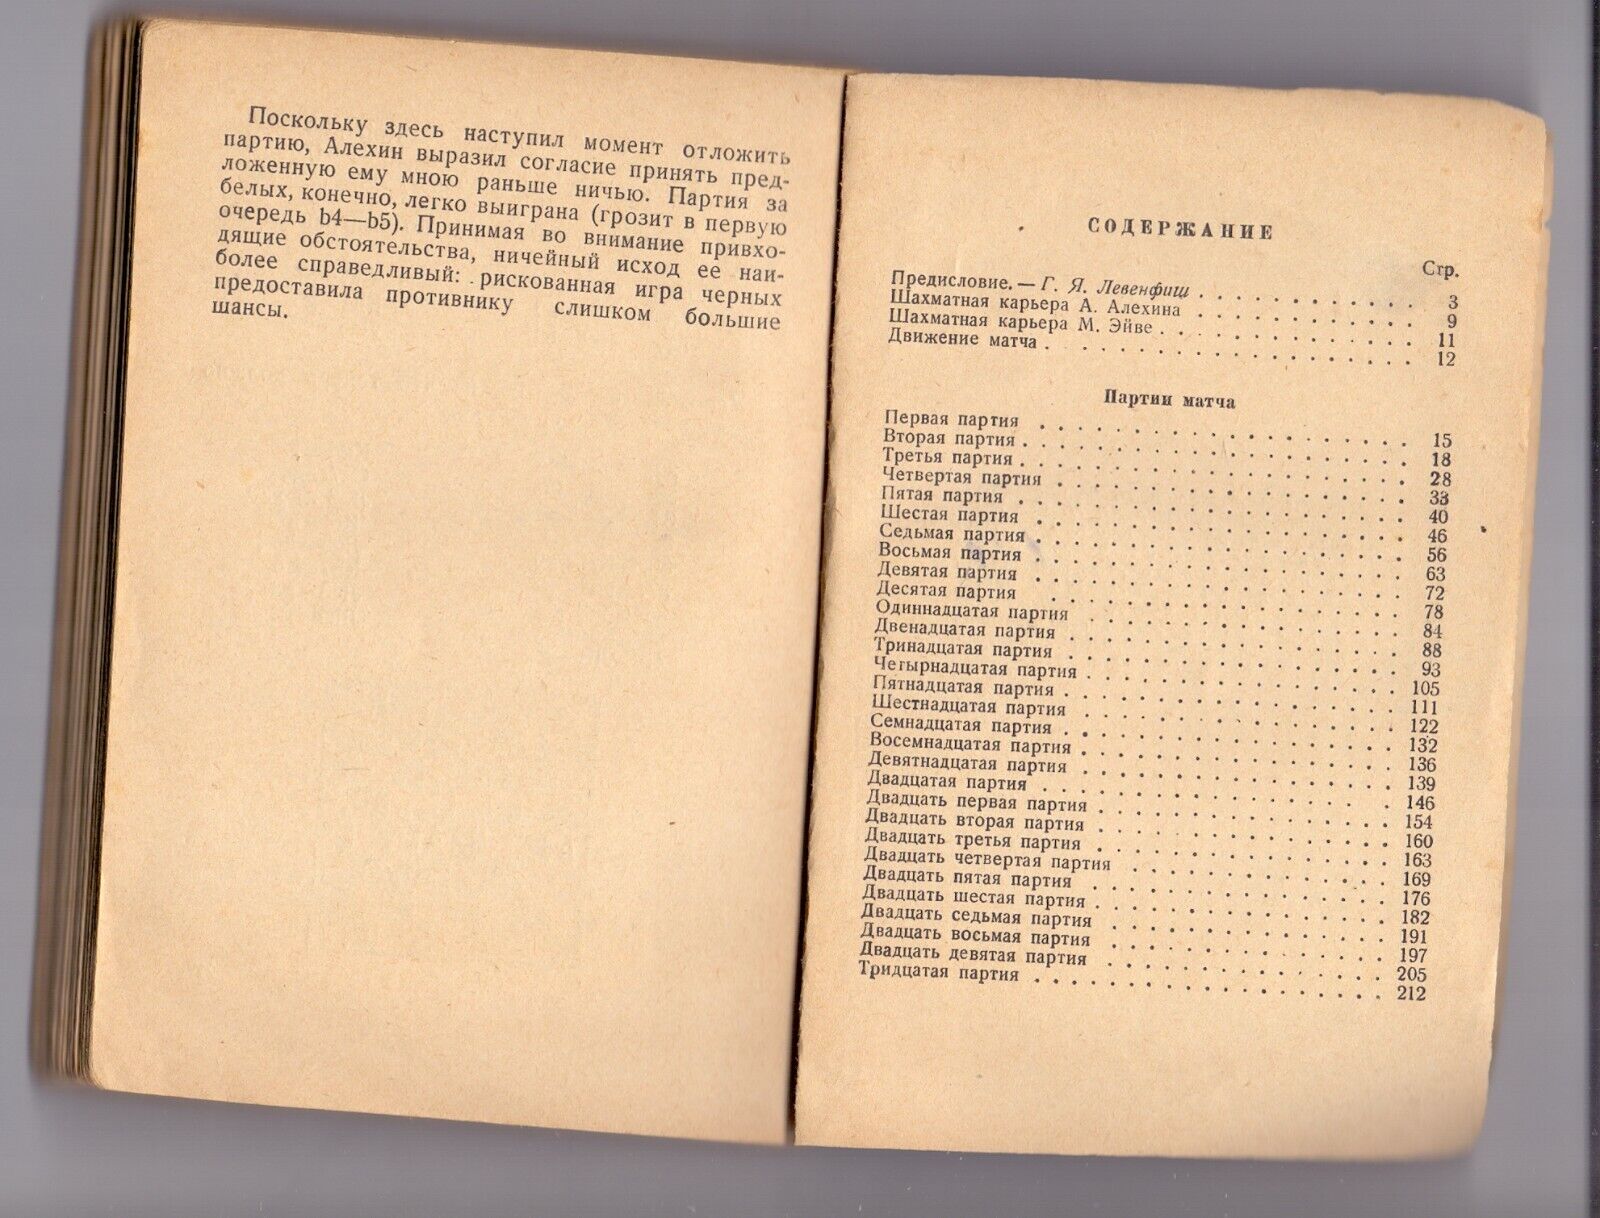 11527.Russian chess book: Levenfish 1936. Alekhine-Euwe world championship